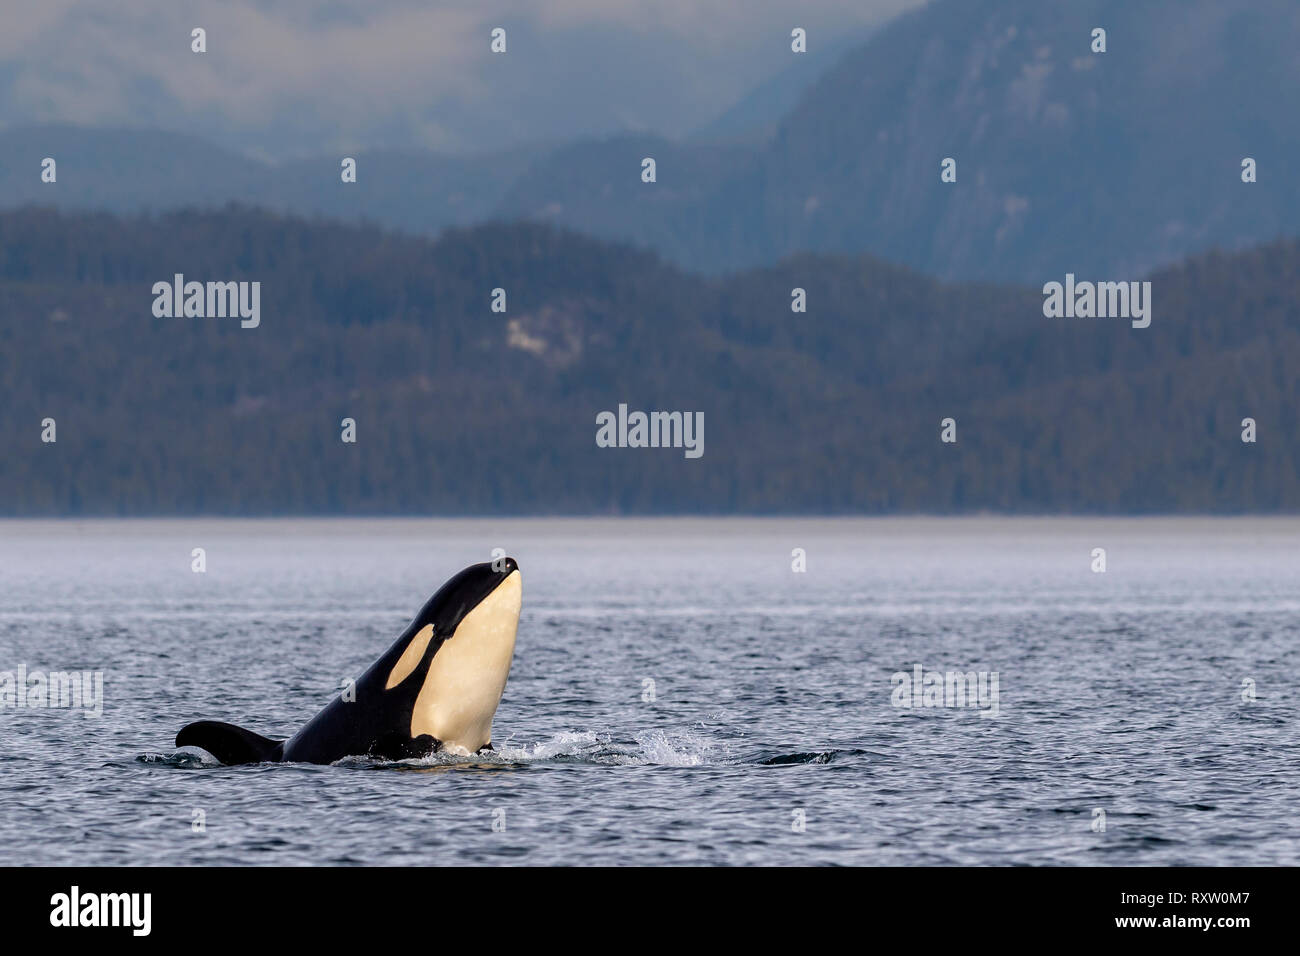 Orca-Wale (Killerwale, Orcinus Orca) in der Queen Charlotte Strait in der Nähe des Great Bear Rainforest, der British Columbia Coastal Mountains, des First Nations Territory, Vancouver Island, British Columbia, Kanada. Stockfoto